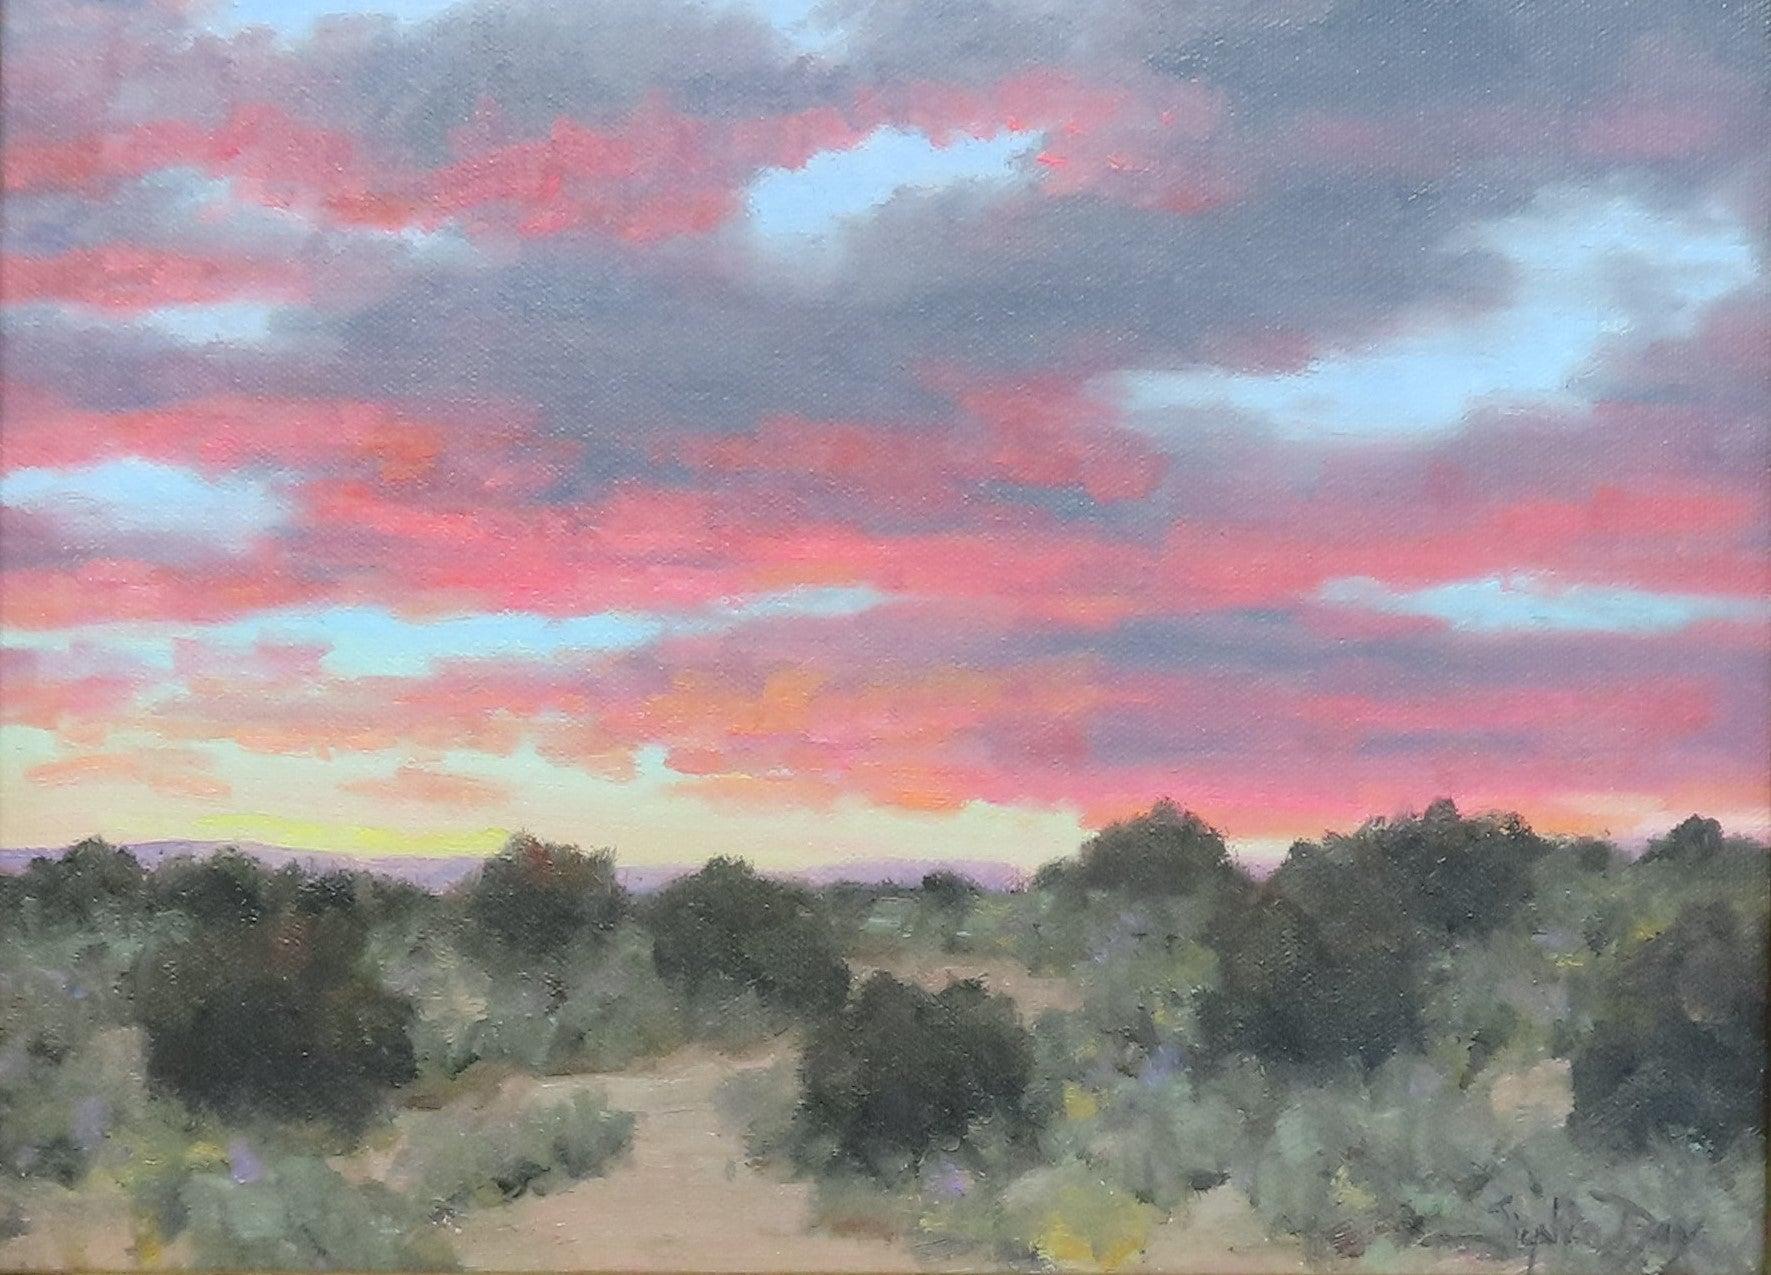 A Santa Fe Sky-painting-Stephen Day-Sorrel Sky Gallery